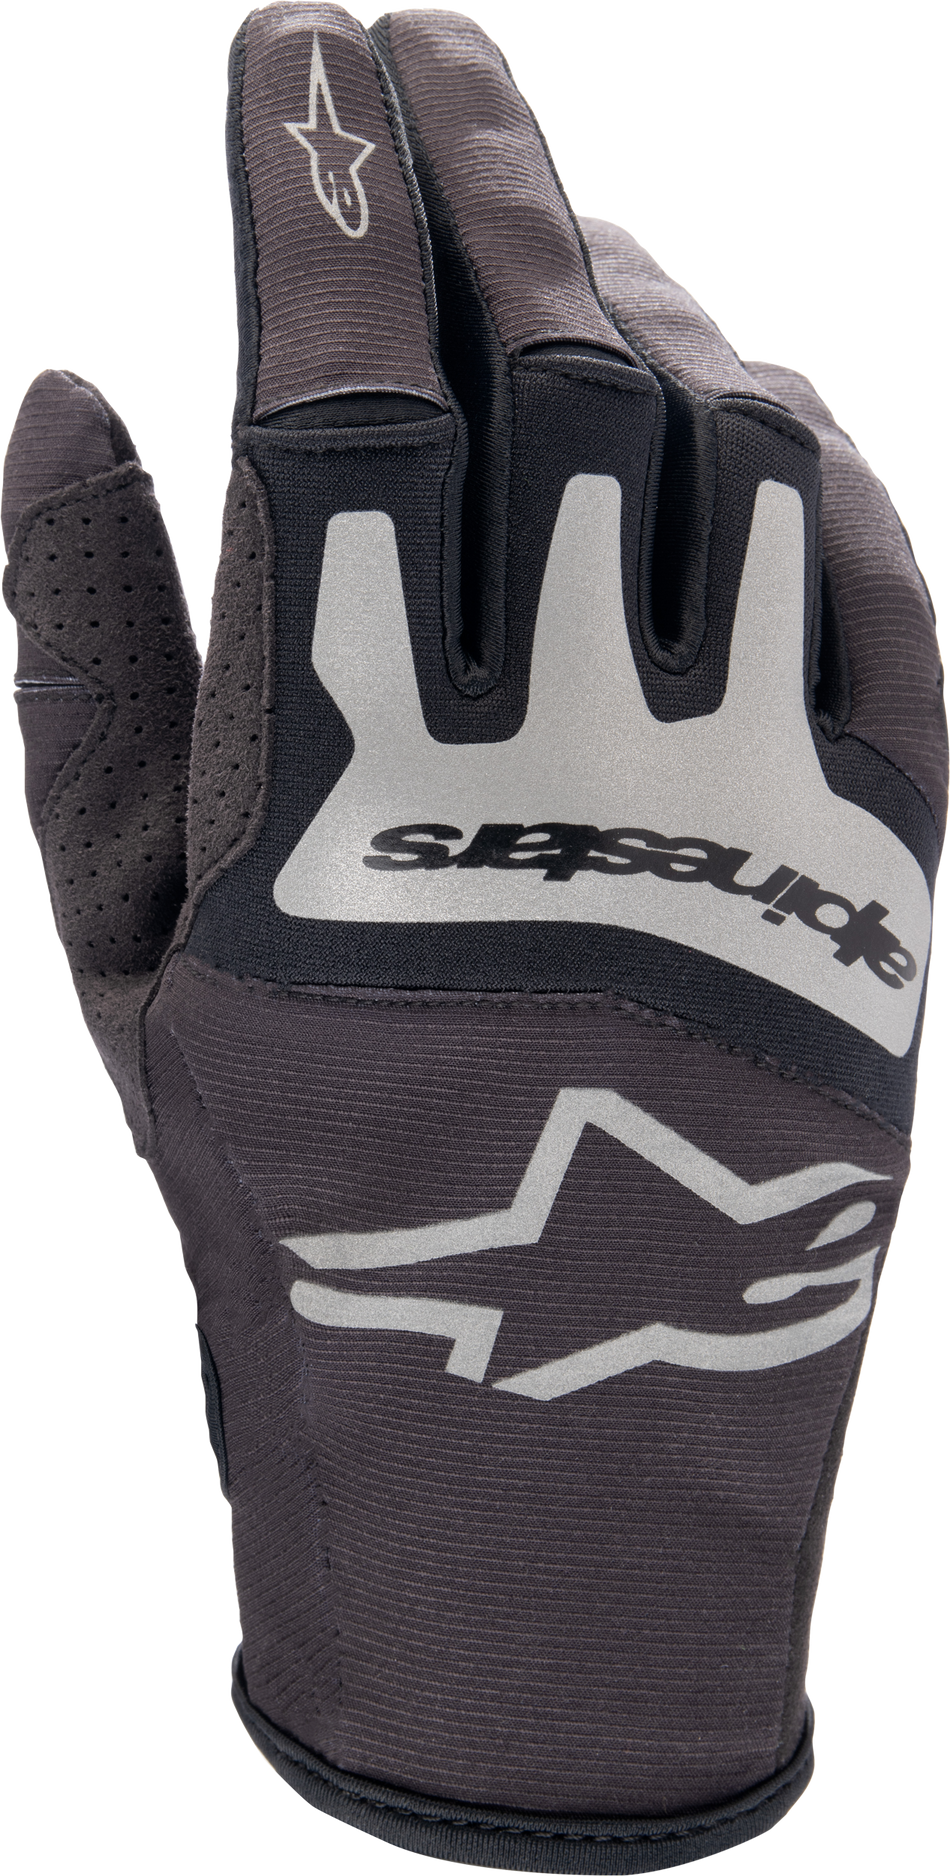 ALPINESTARS Techstar Gloves Black/Brushed Silver Lg 3561023-1419-L